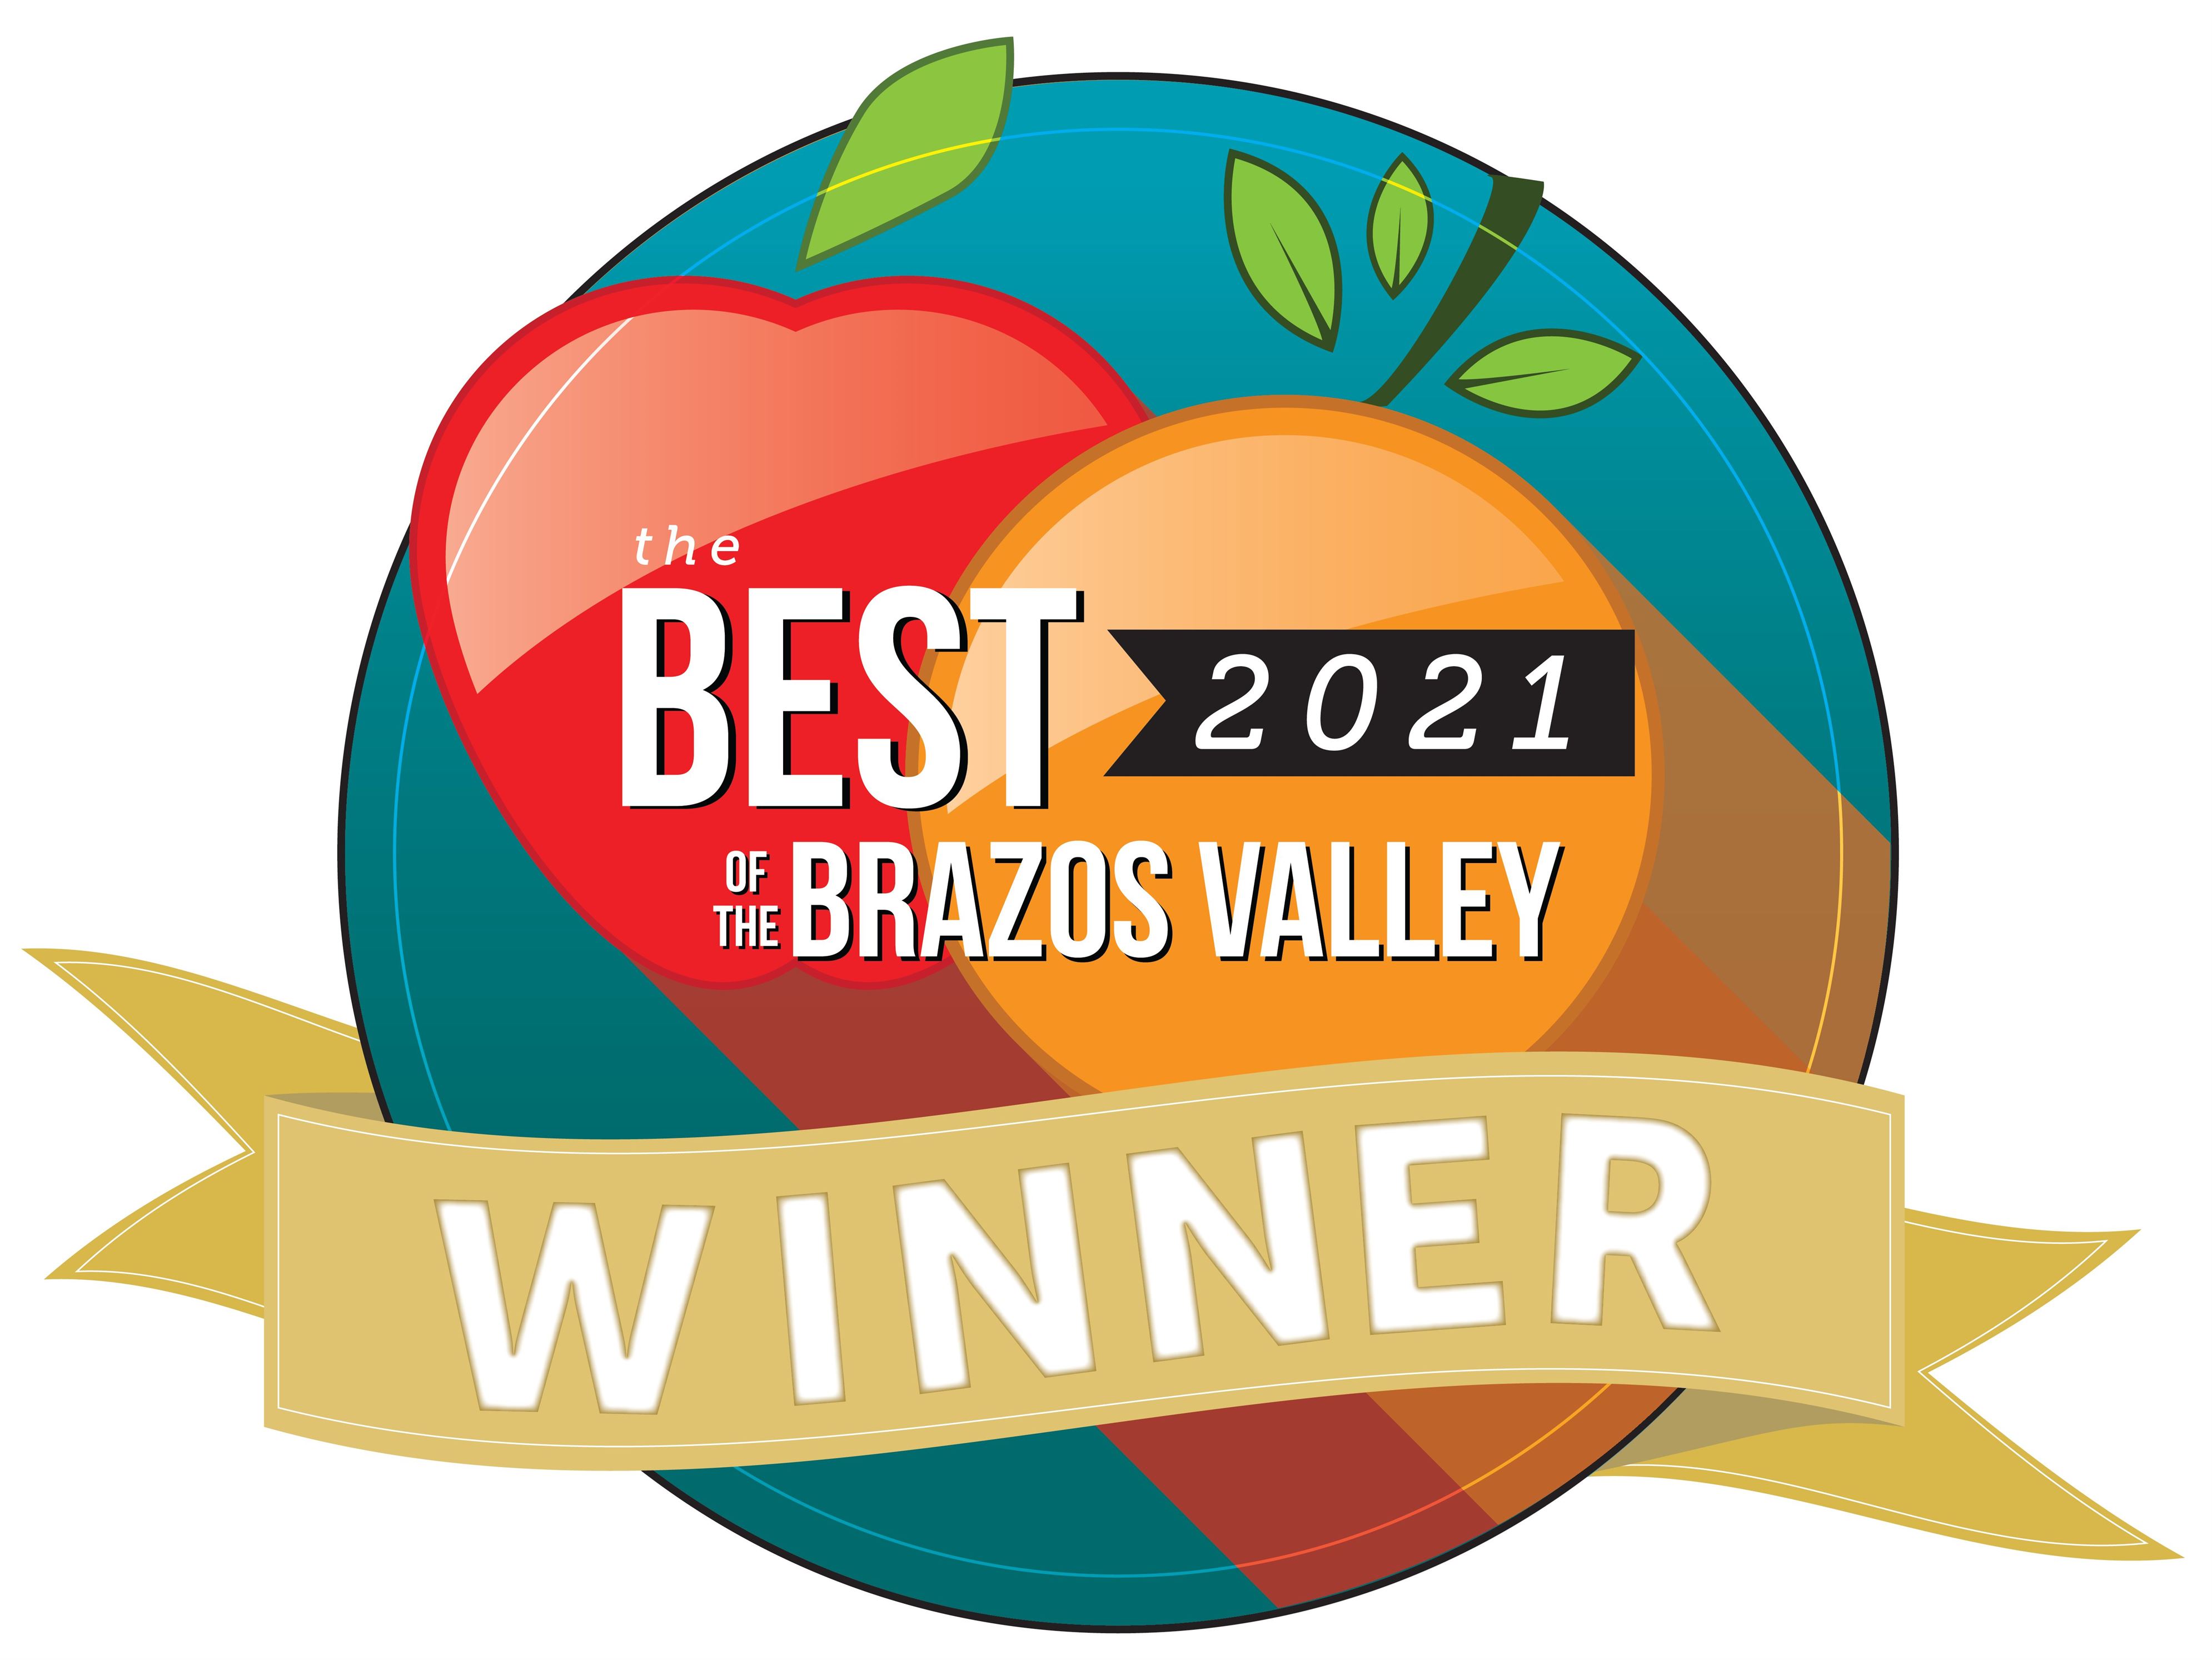 Best of the Brazos Valley Winner 2021